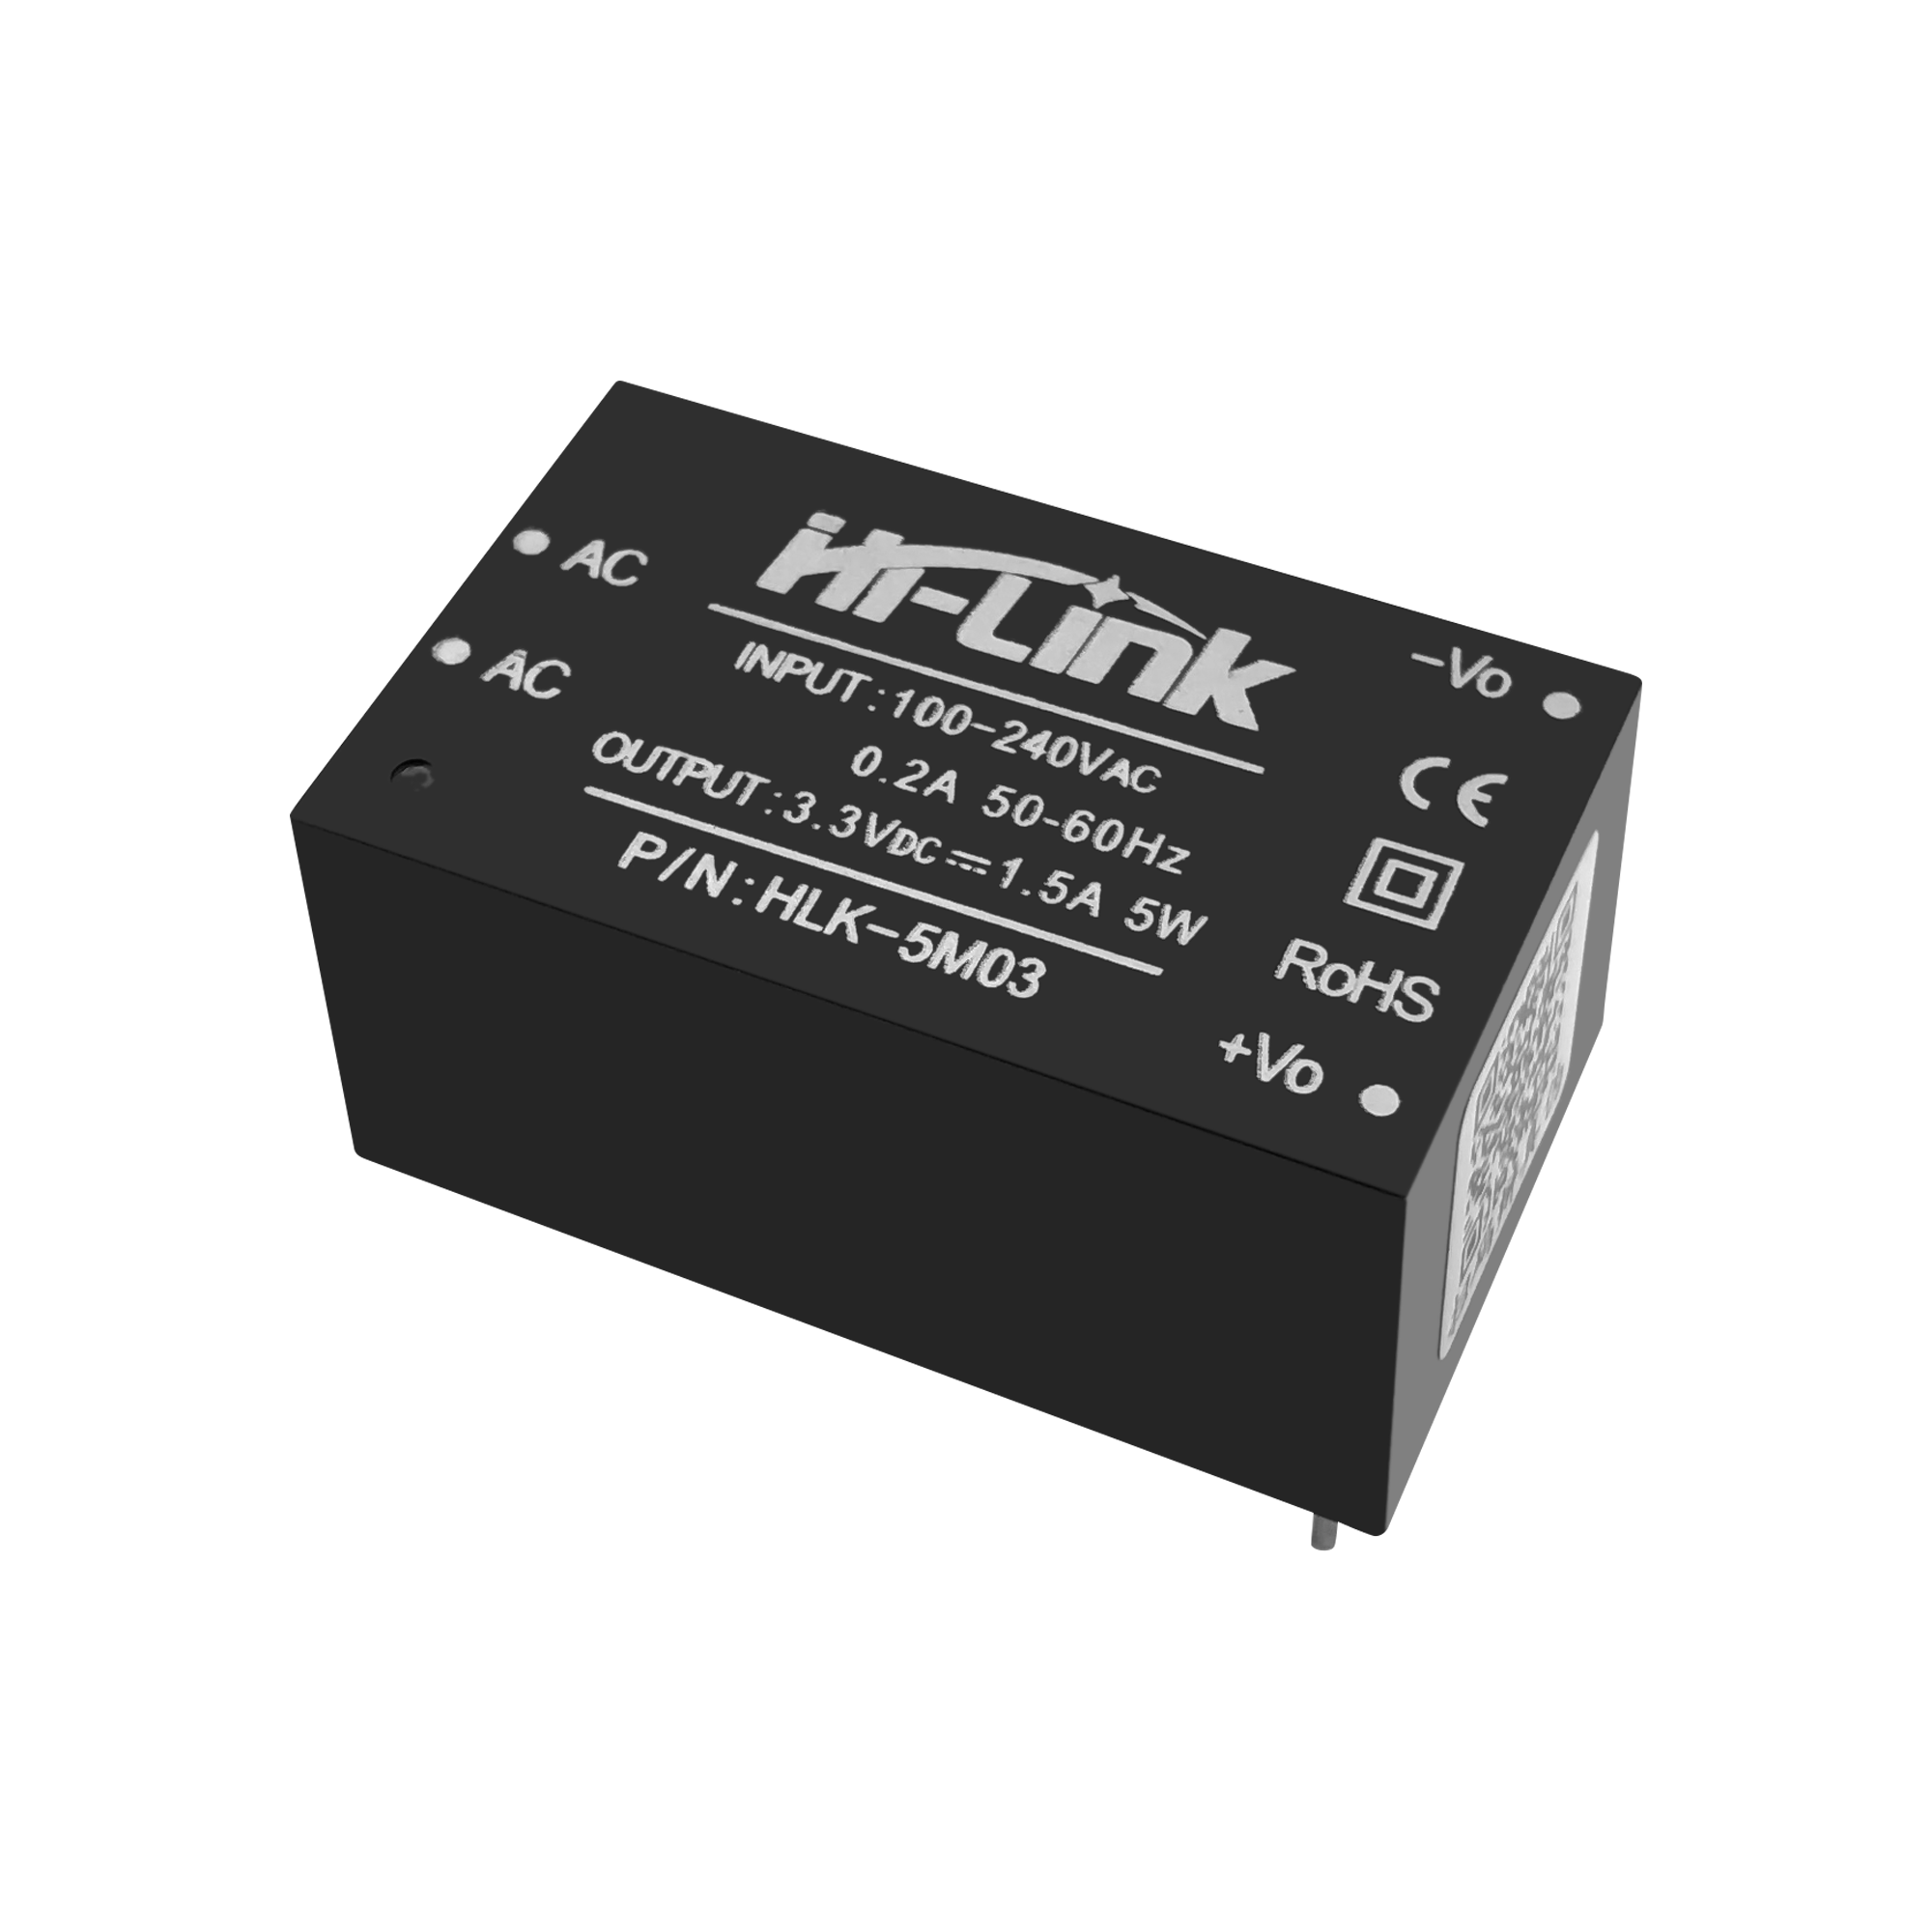 10 Stks/partij HLK-5M03 220V Naar 3.3V 5W Mini Buck Voeding Module Intelligente Smart Home ac Dc Converter